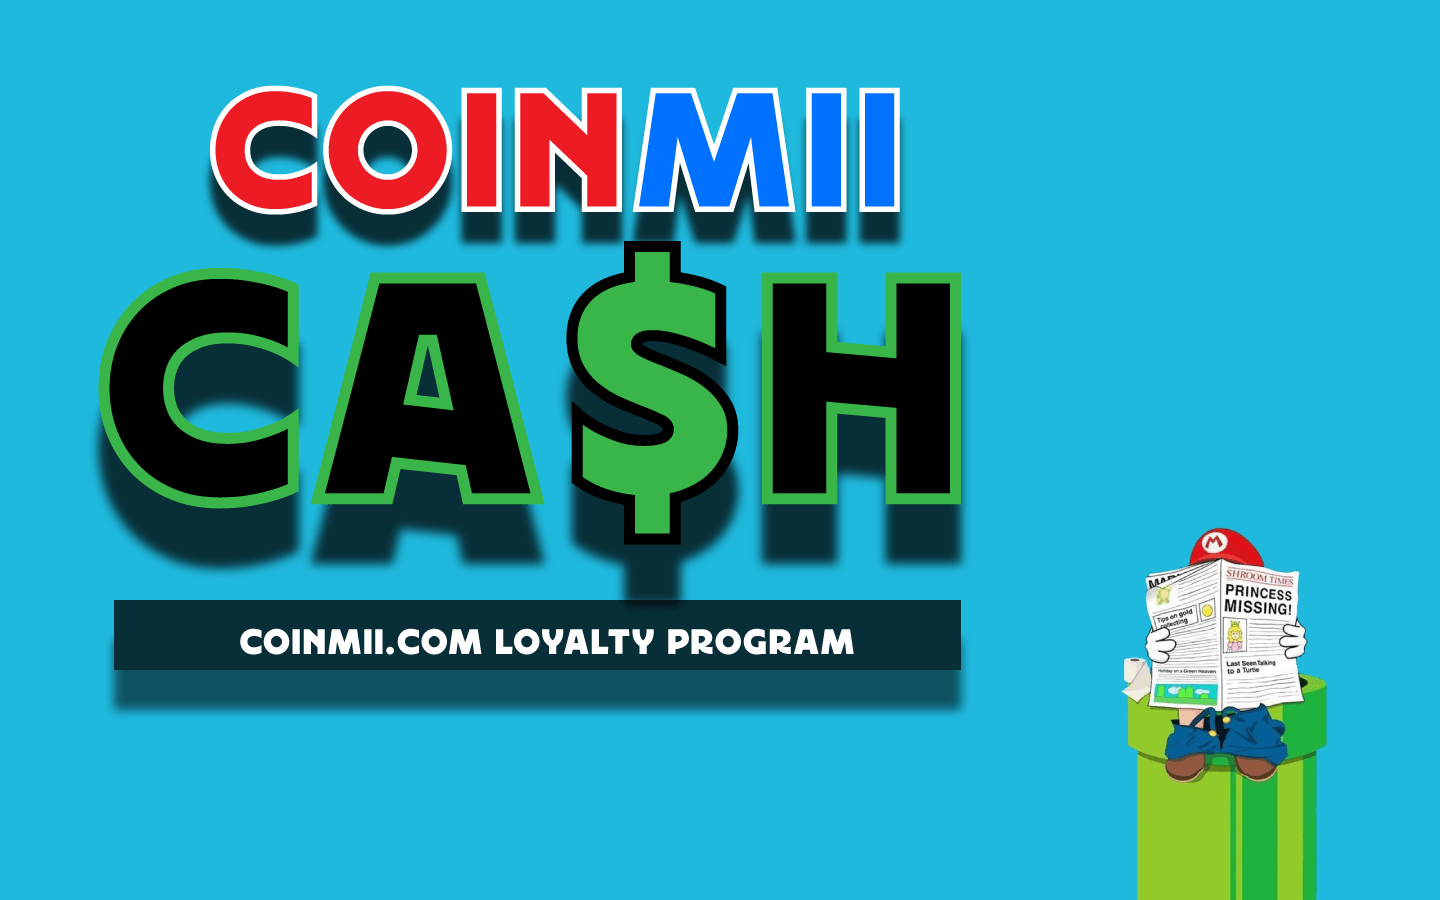 COINMII CASH
Coinmii.com Loyalty Program